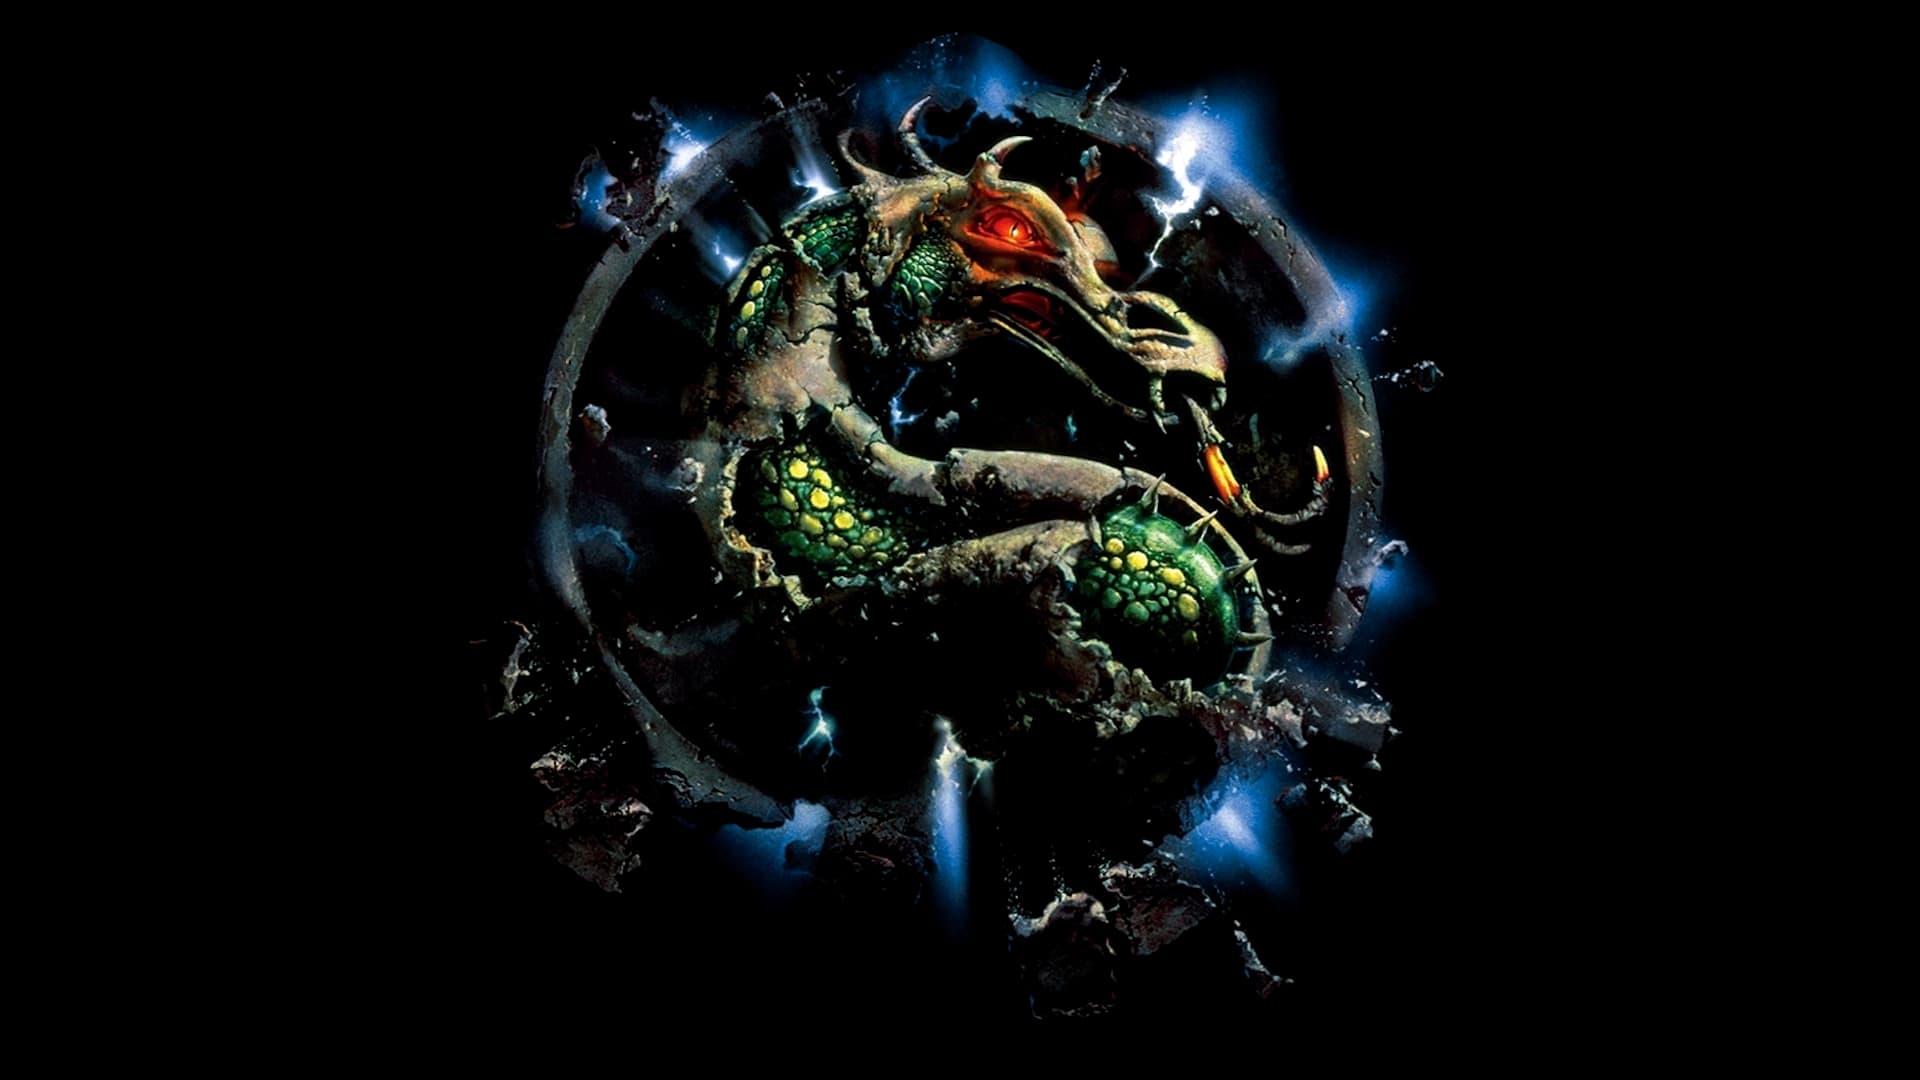 Mortal Kombat - Distruzione totale